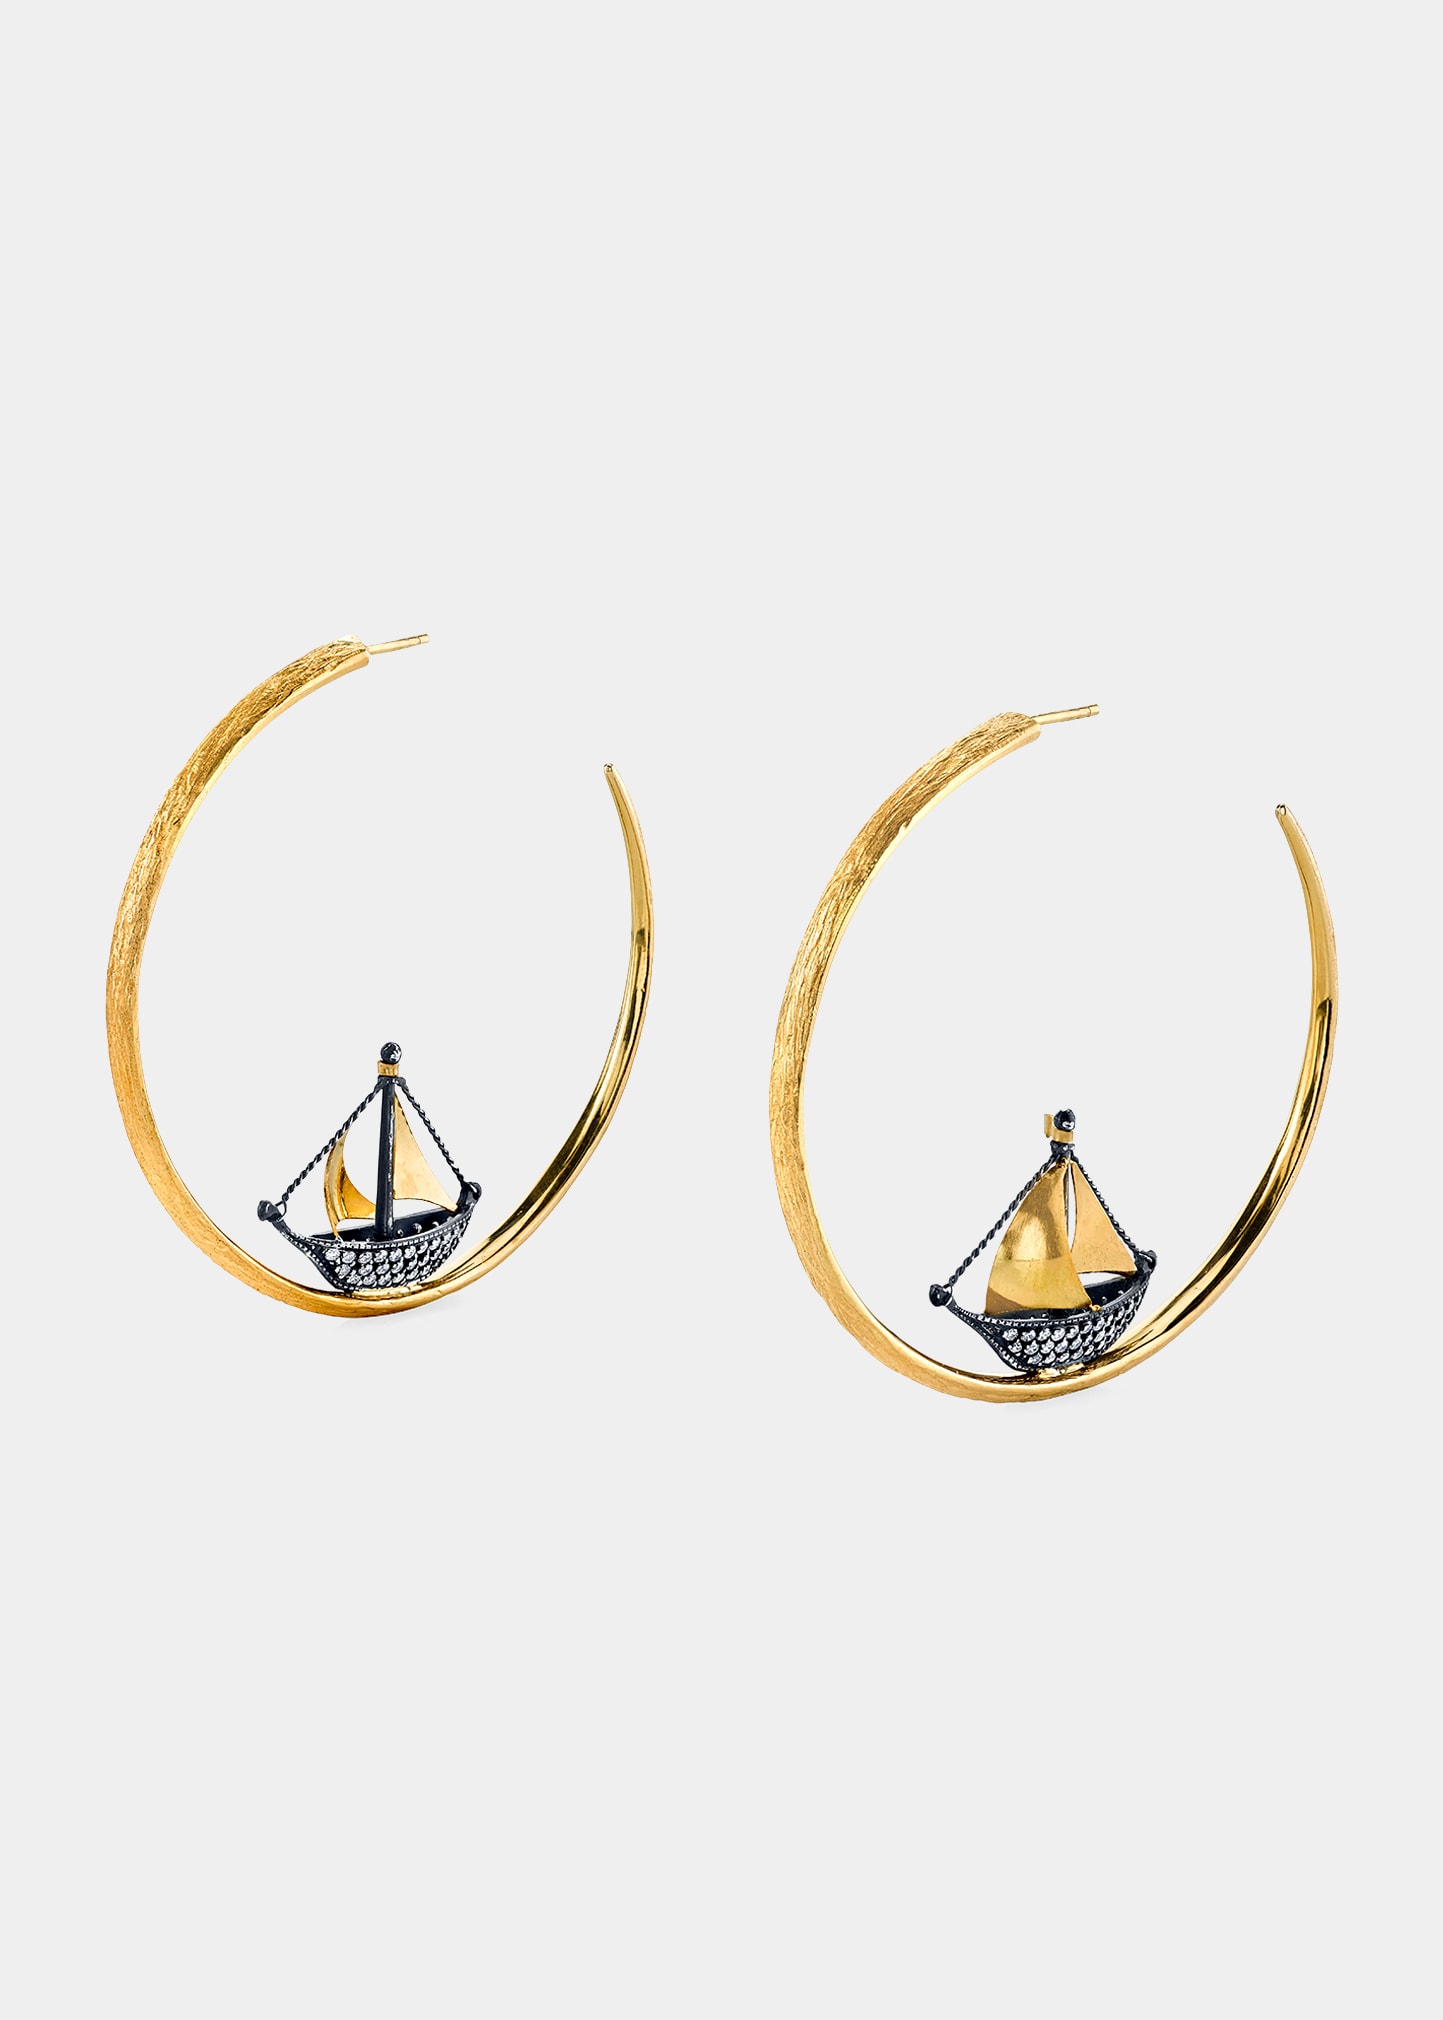 Arman Sarkisyan Sail Boat Hoop Earrings With Diamonds In Gold